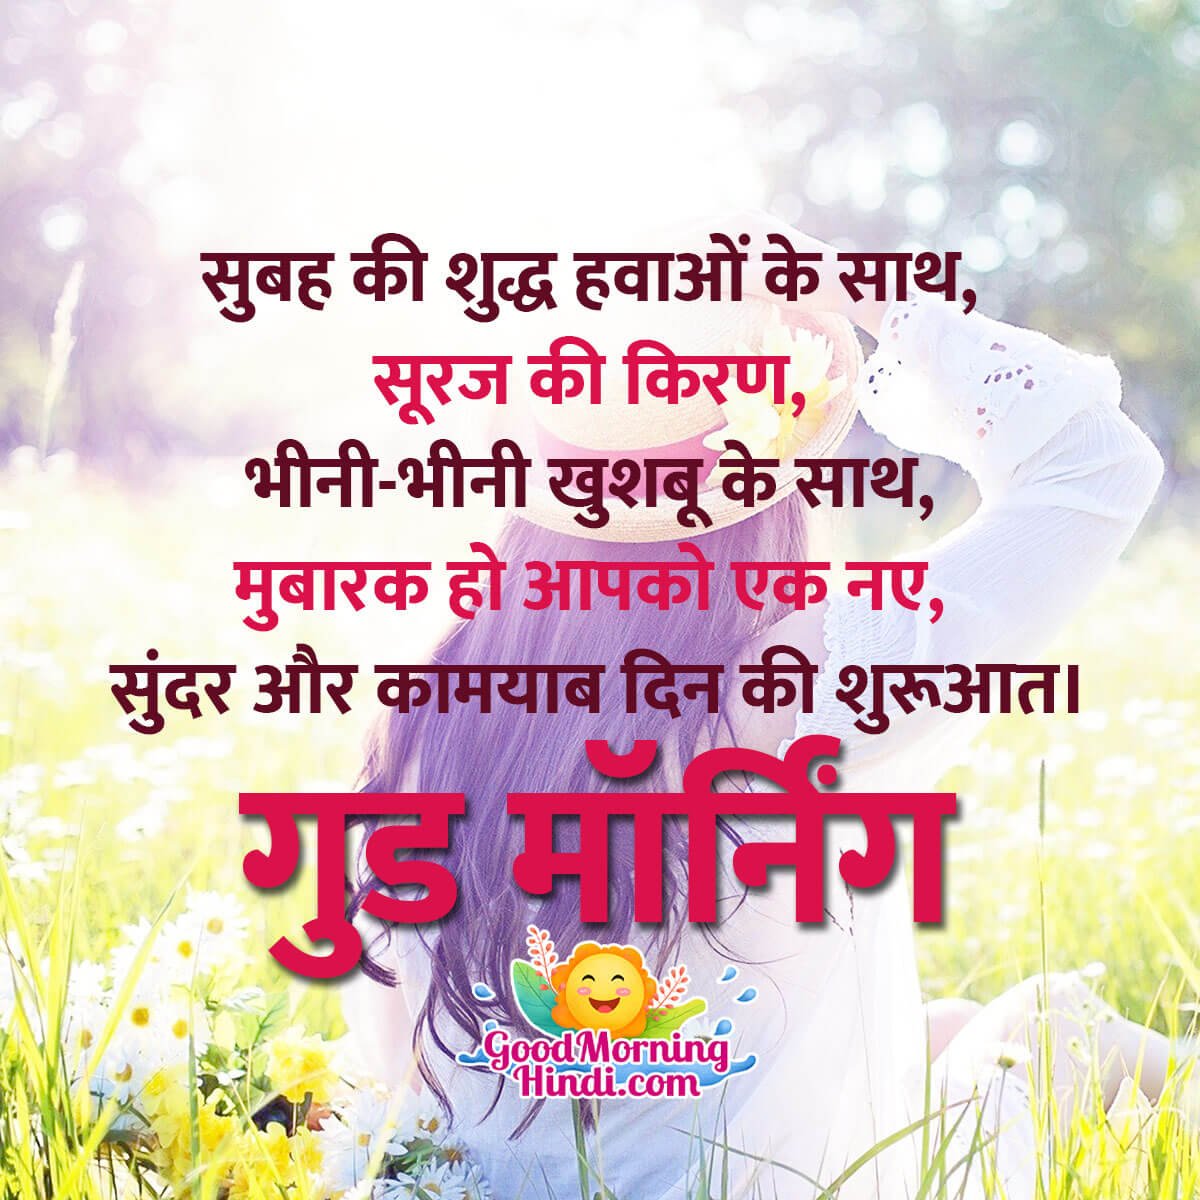 Good Morning Hindi Shayari Image